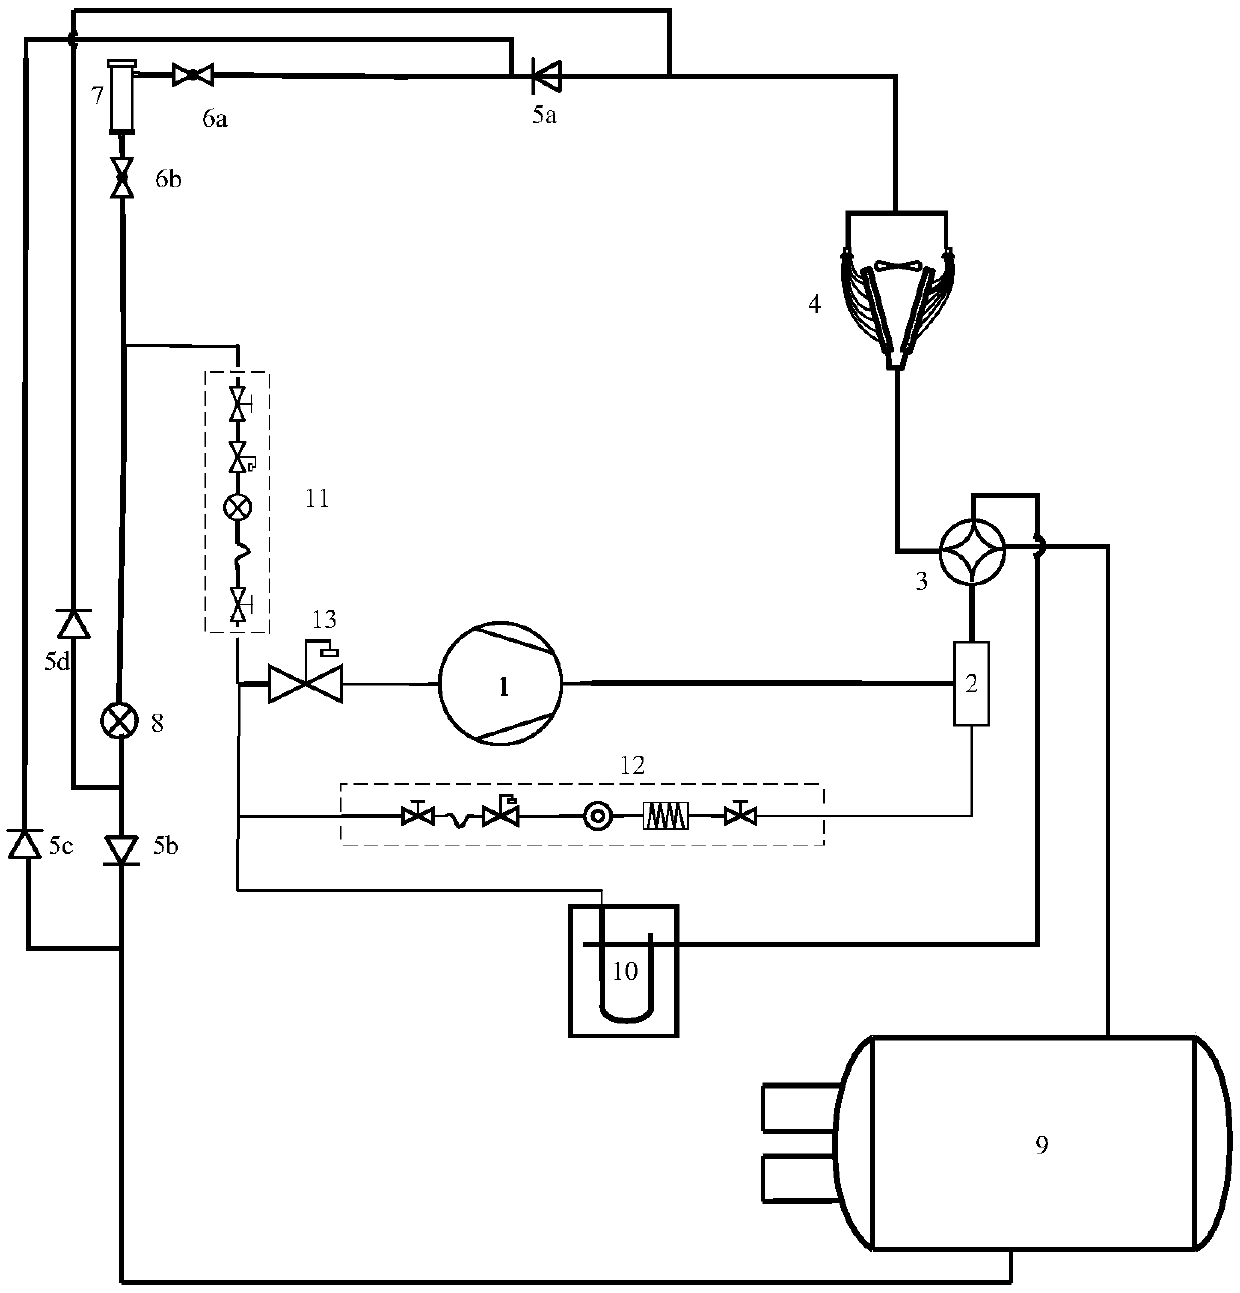 Control system, control method and air-conditioning system for preventing air-conditioning compressor liquid shock